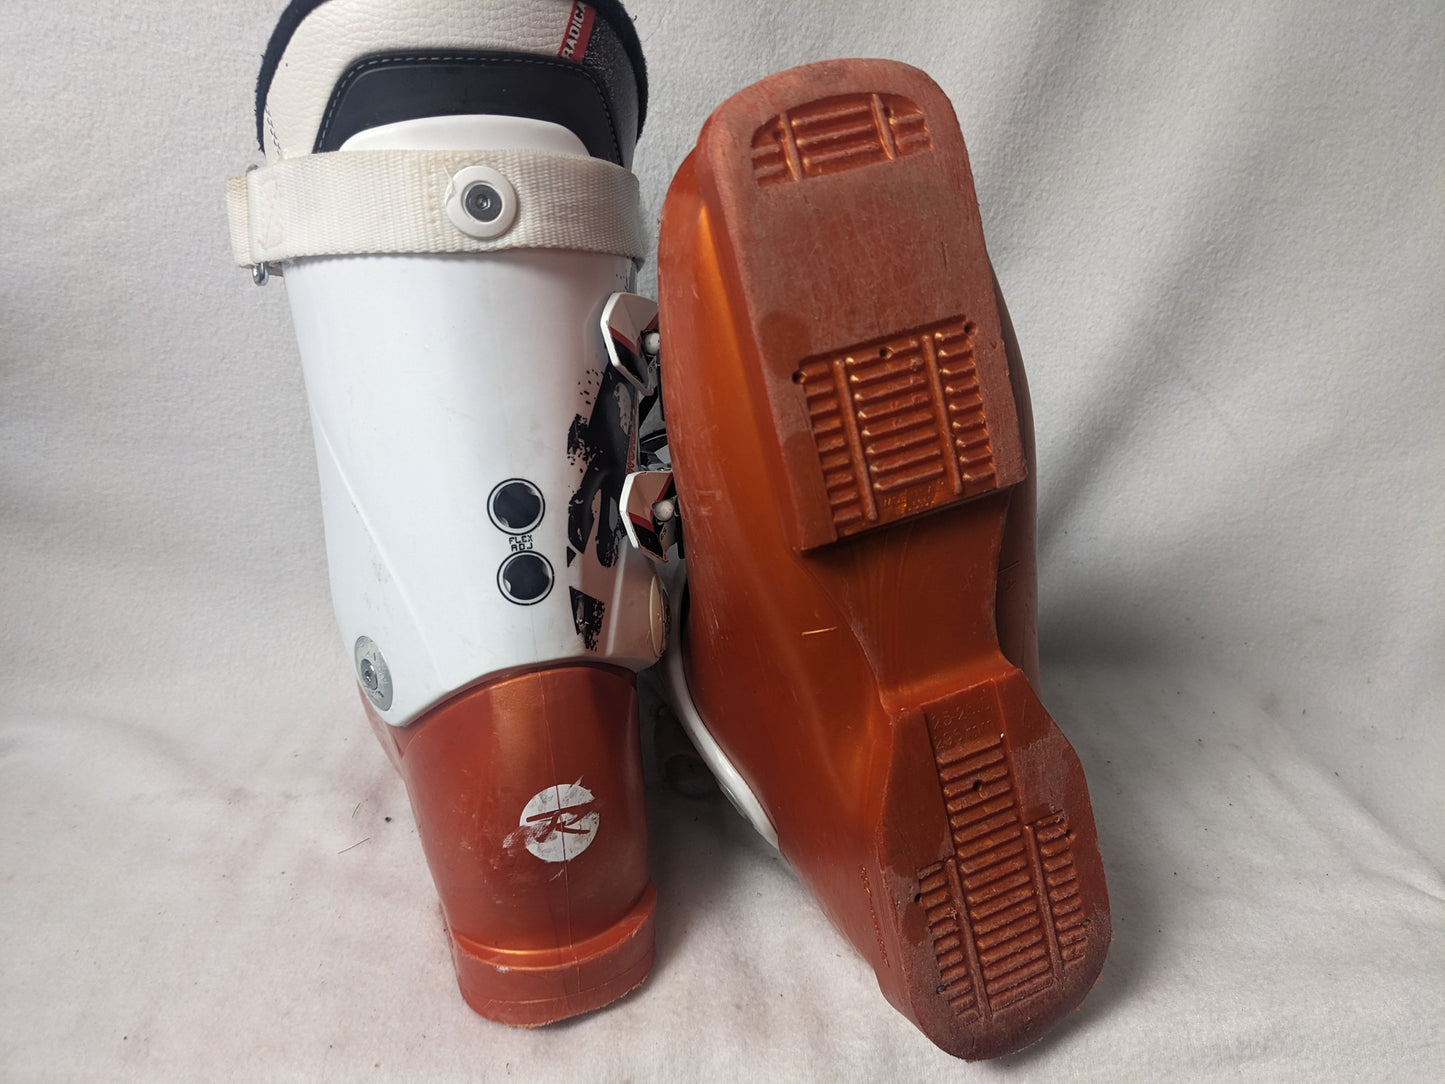 Rossignol World Cup SI 70 Ski Boots Size 25.5 Color Orange Condition Used